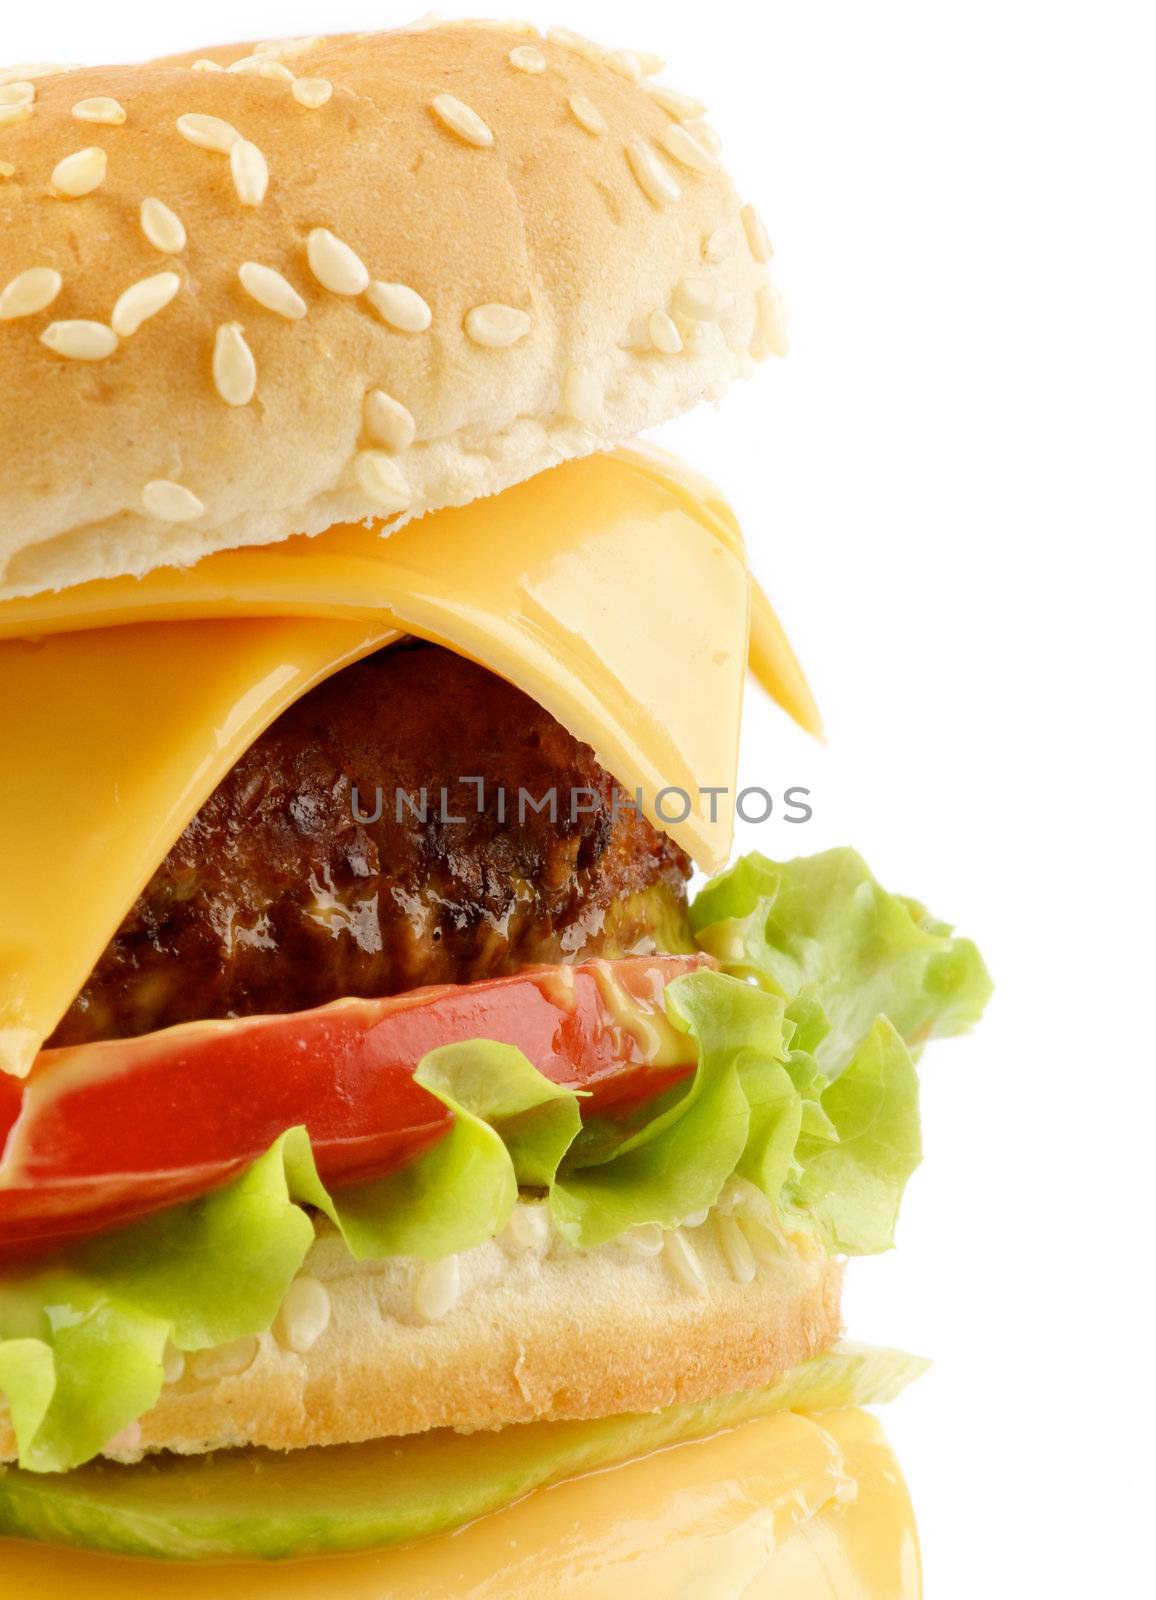 Tasty Cheeseburger by zhekos